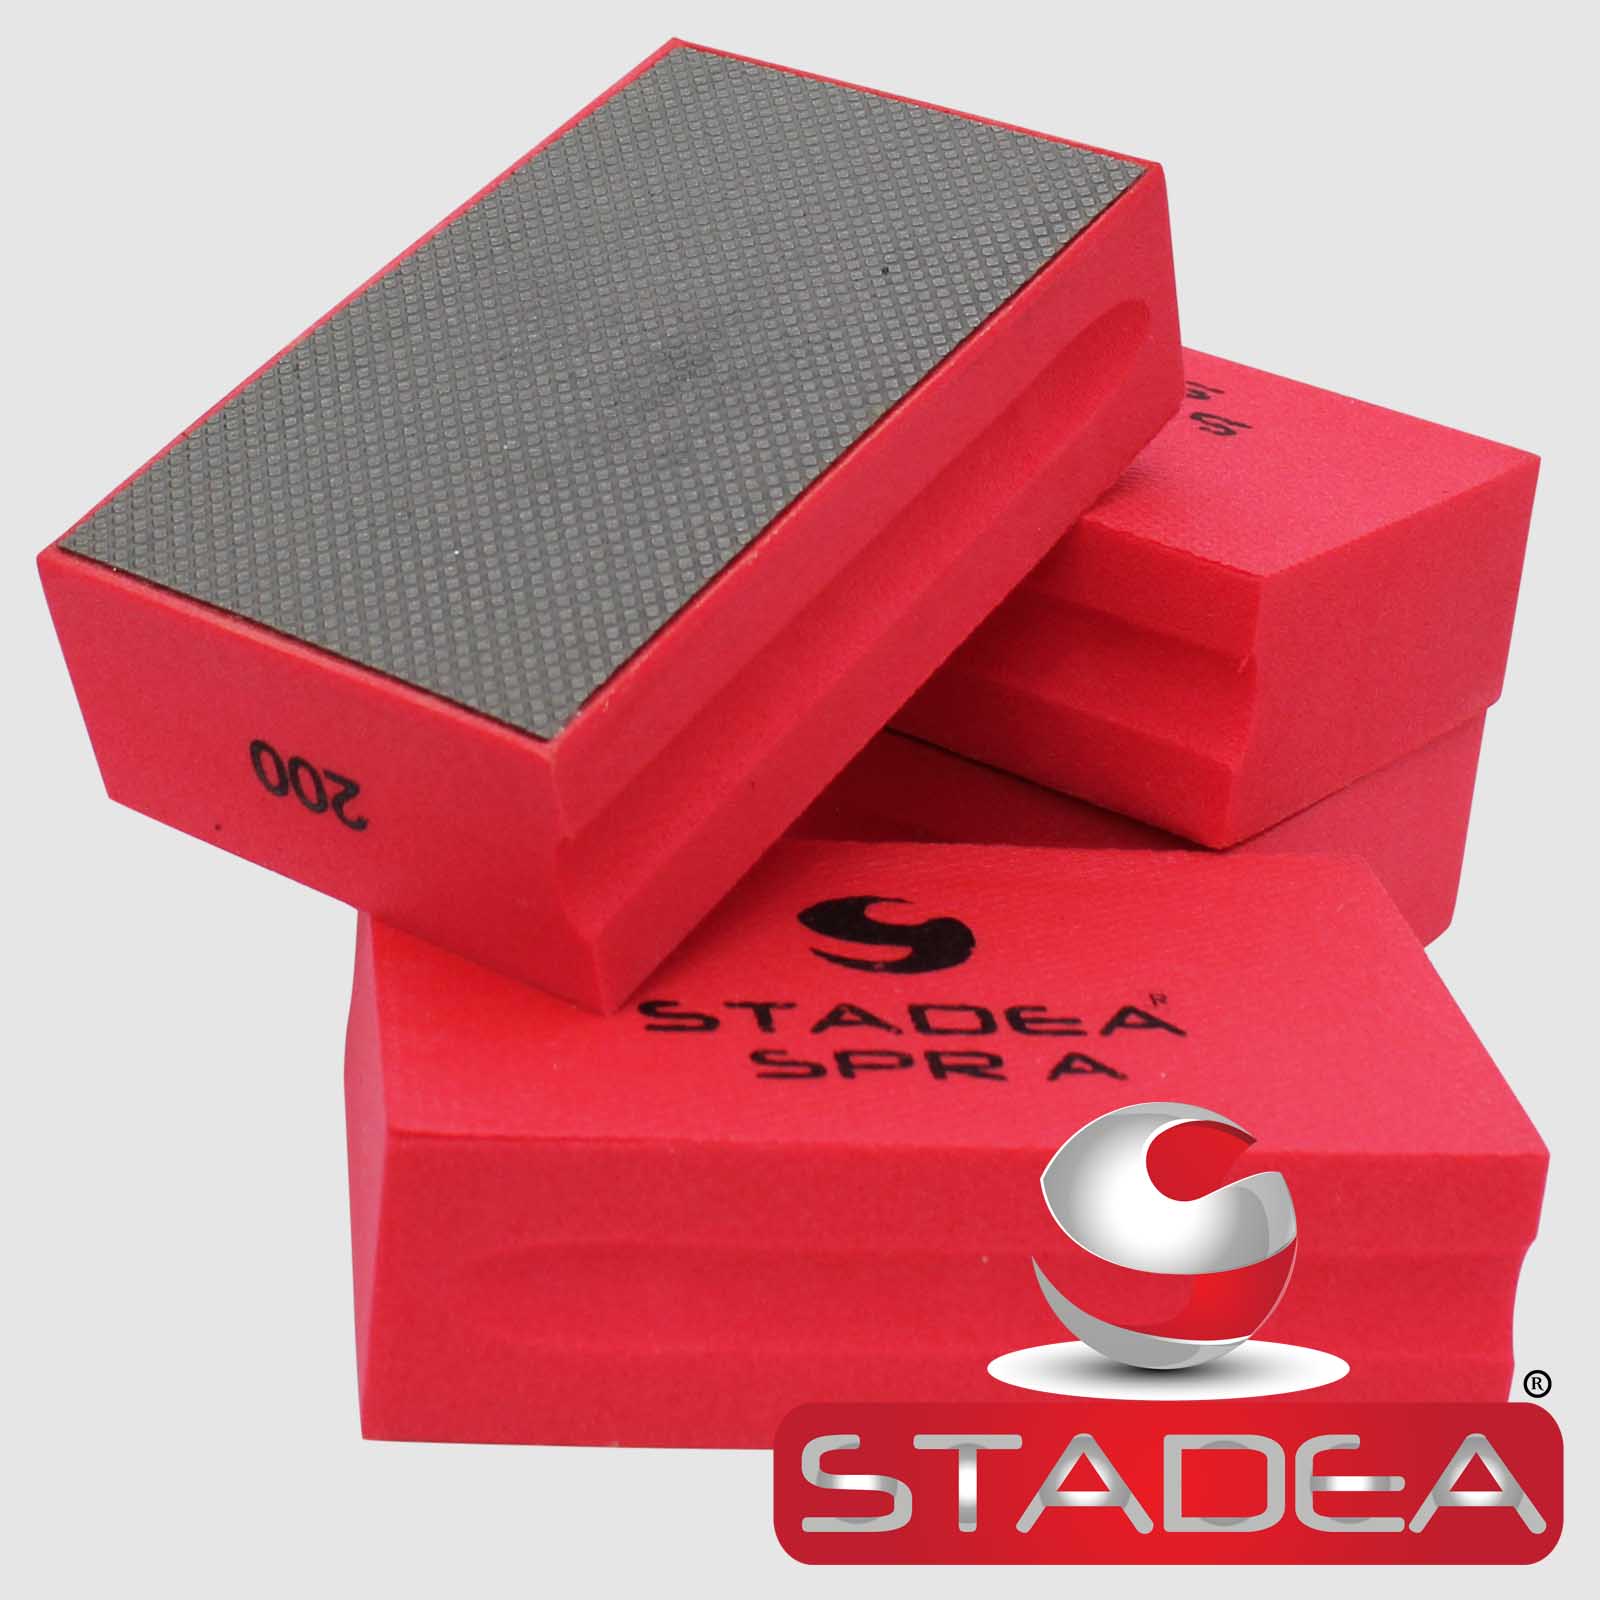 Stadea Series Super A - Diamond Hand Polishing Pads